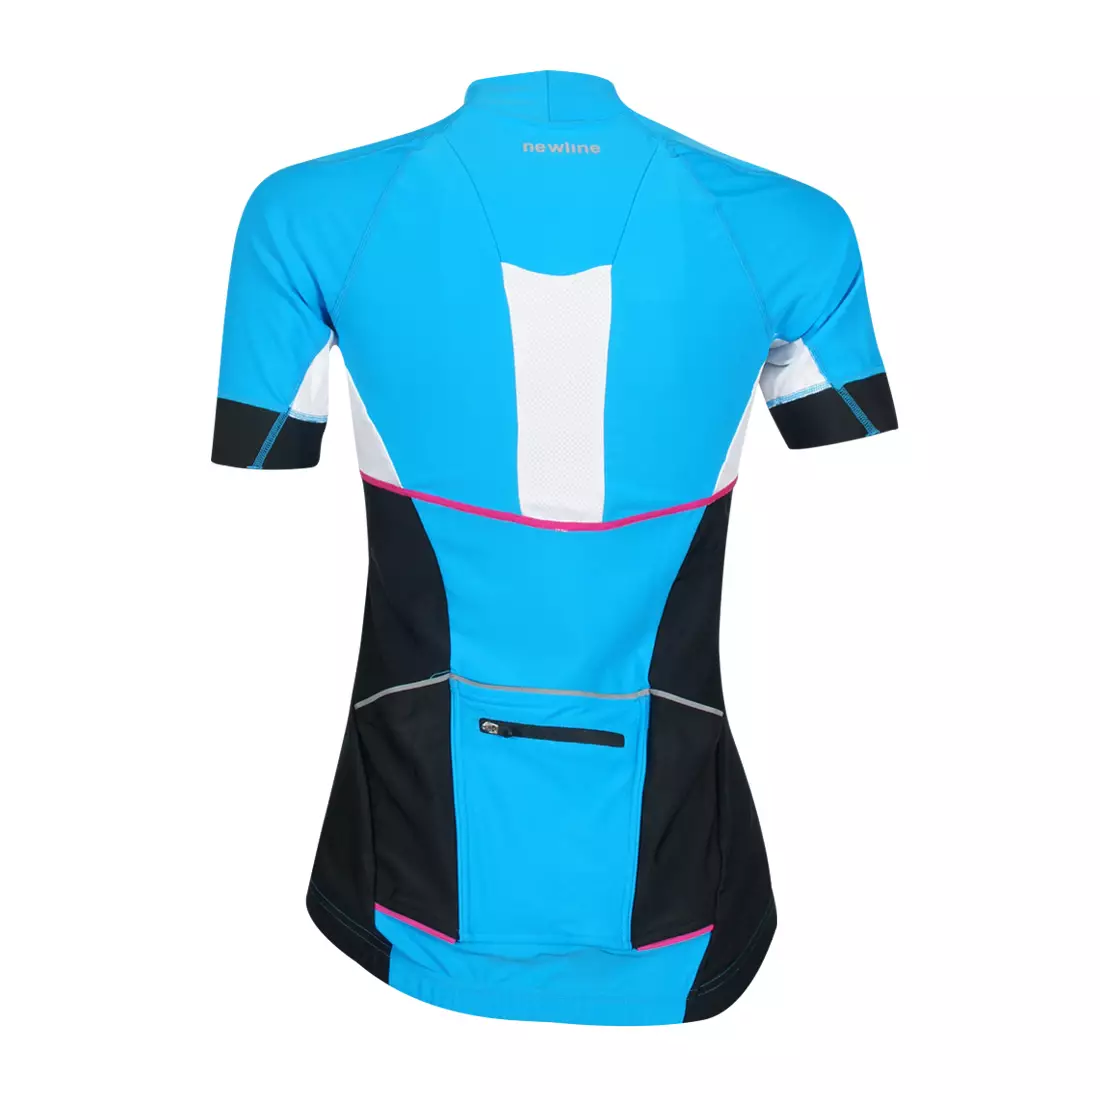 NEWLINE BIKE COMPRESSION JERSEY - women's cycling jersey 20570-405